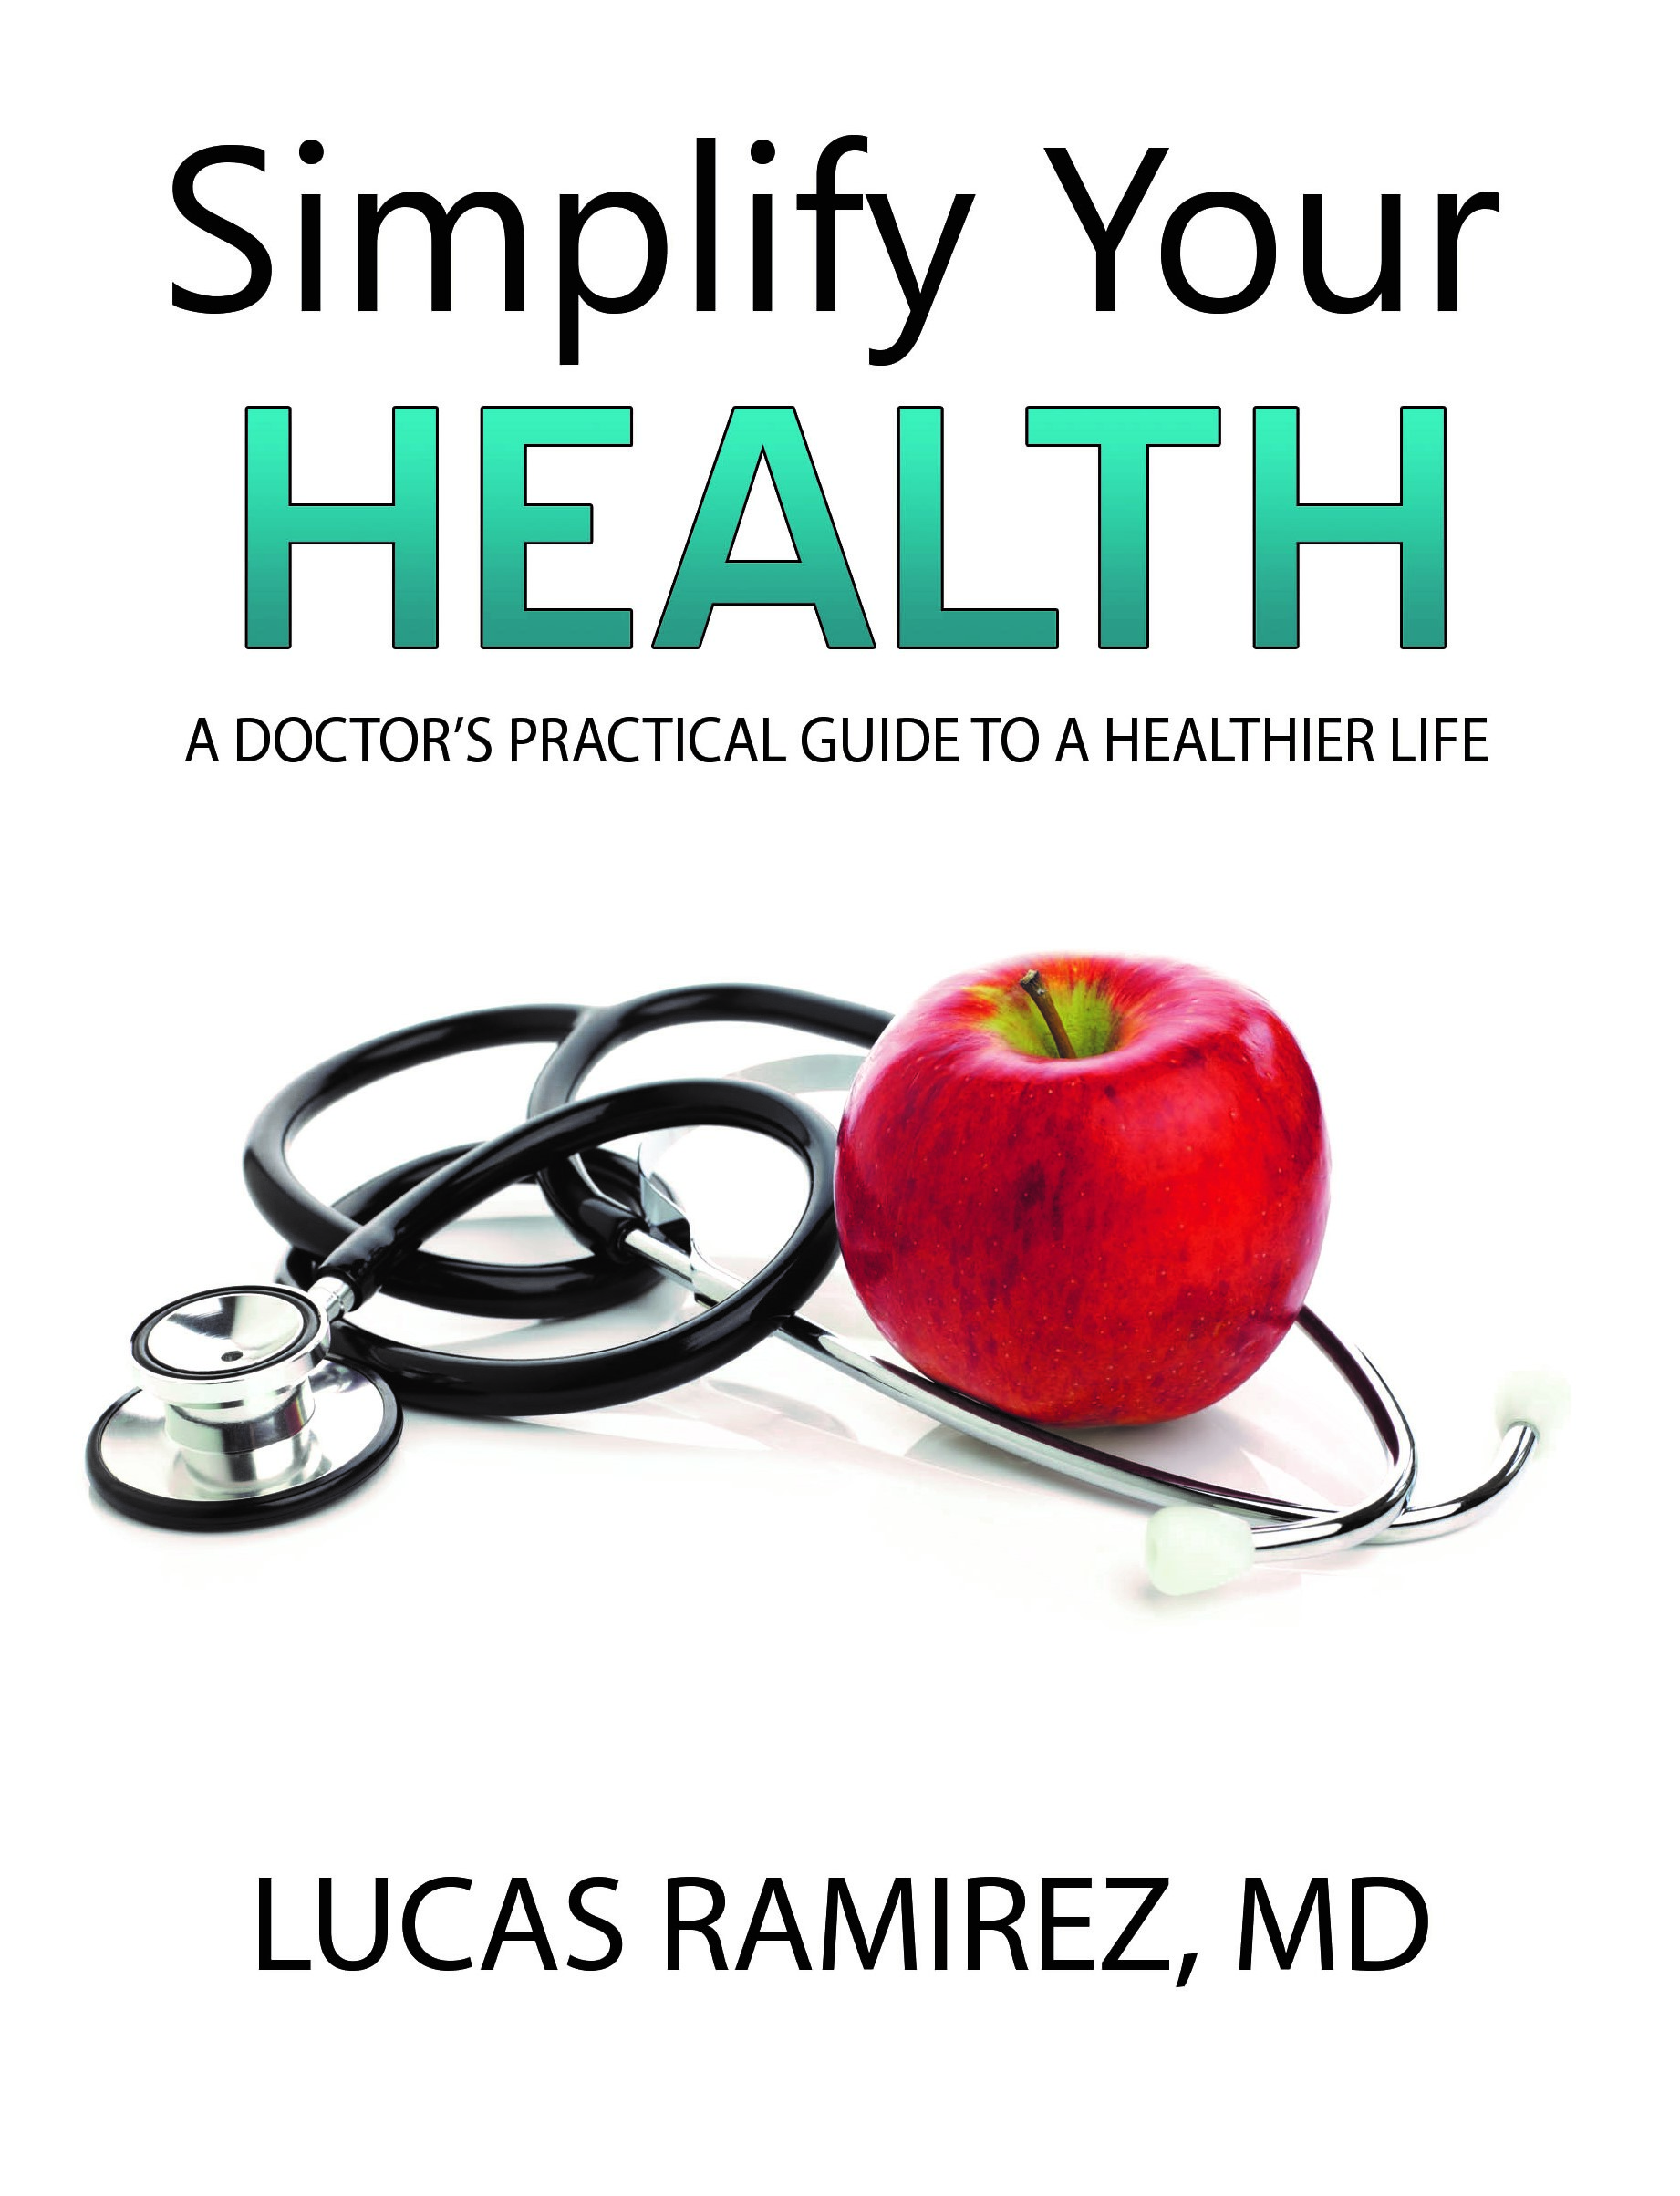 simply health